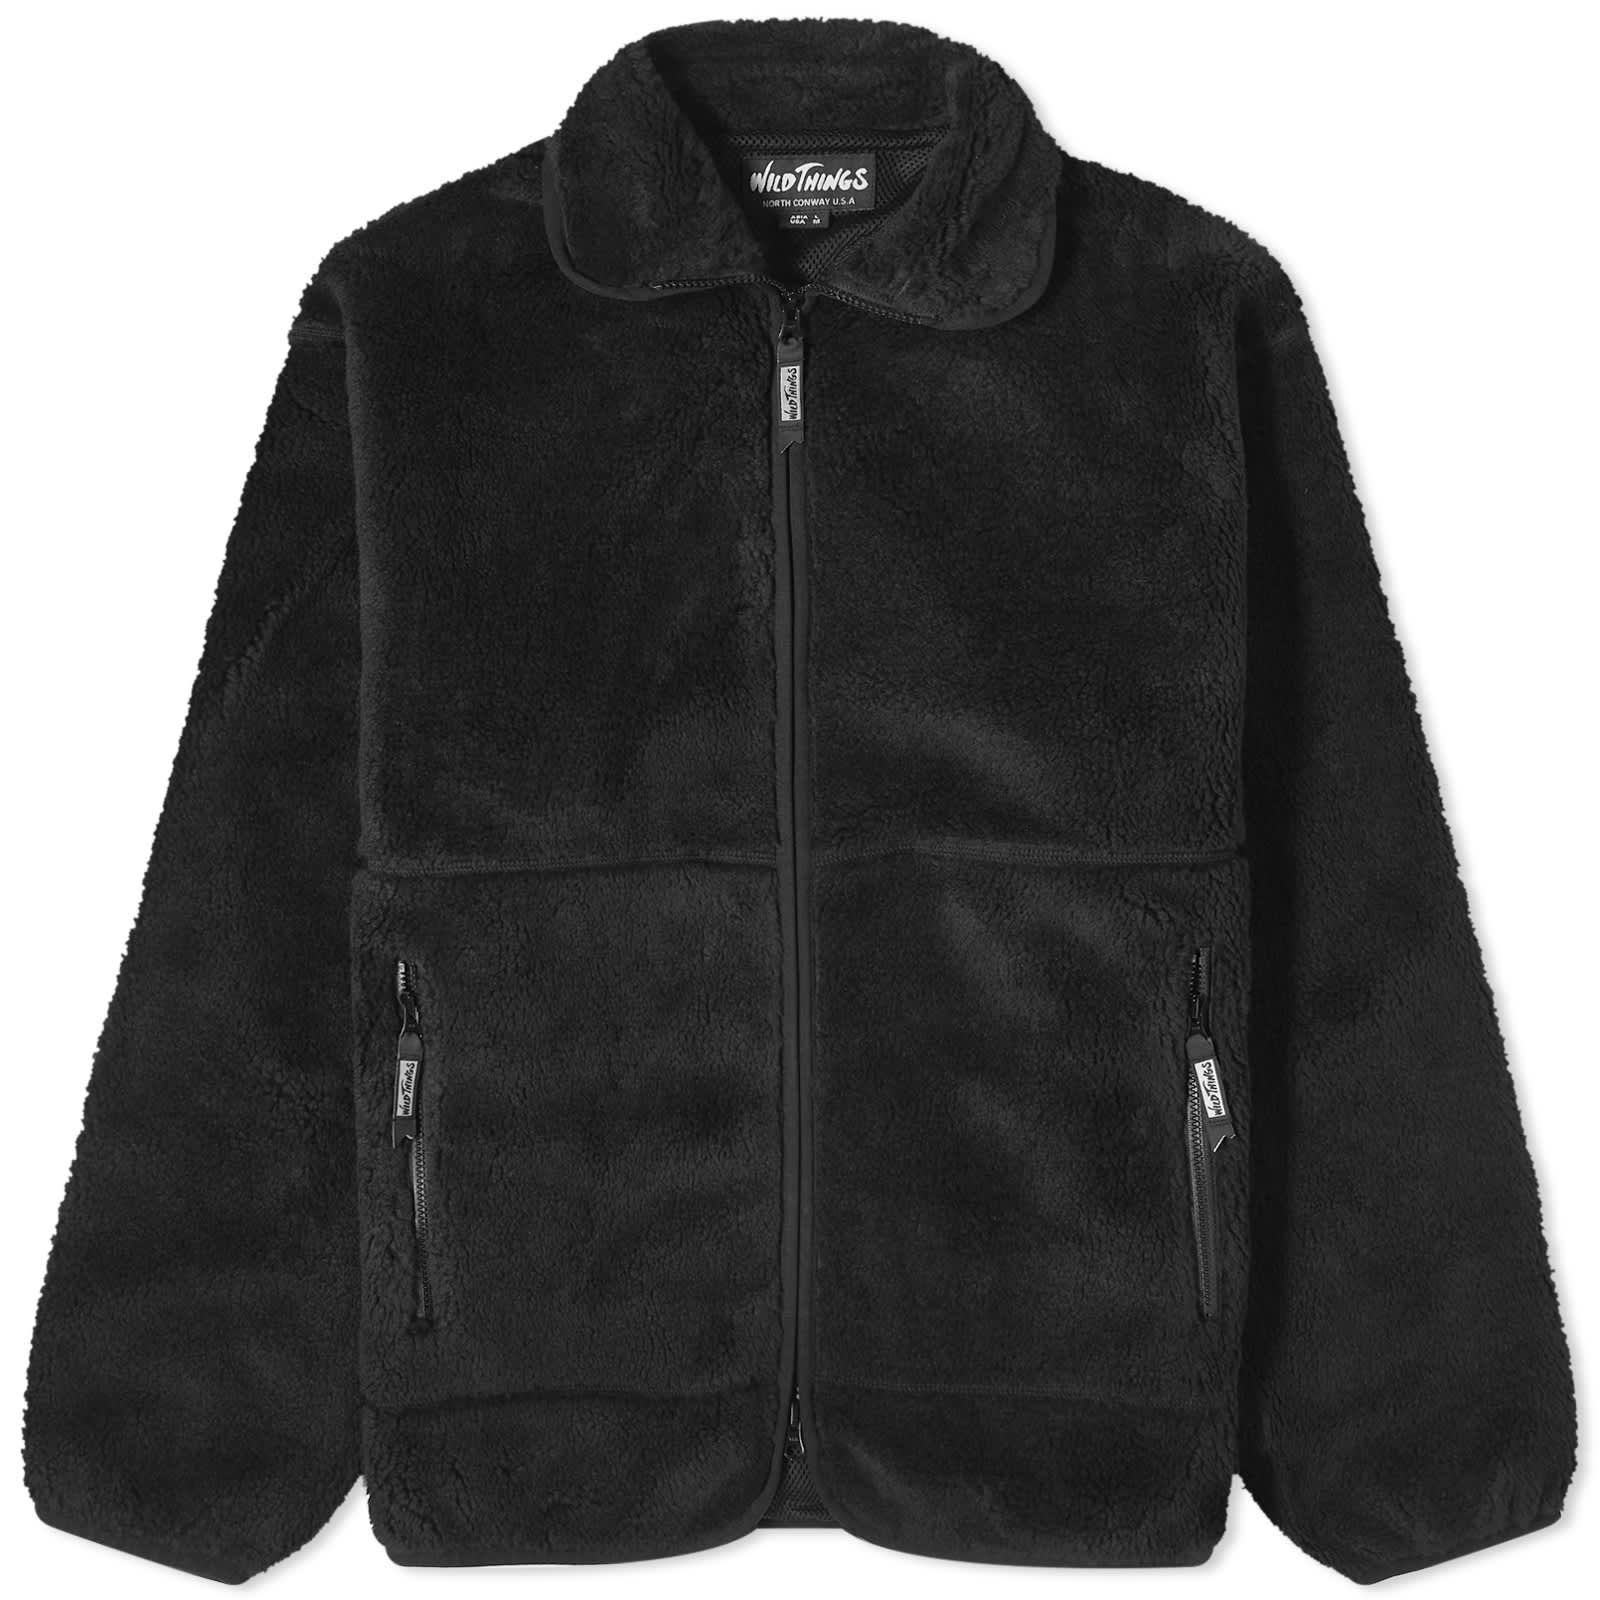 Куртка Wild Things Boa, черный цена и фото